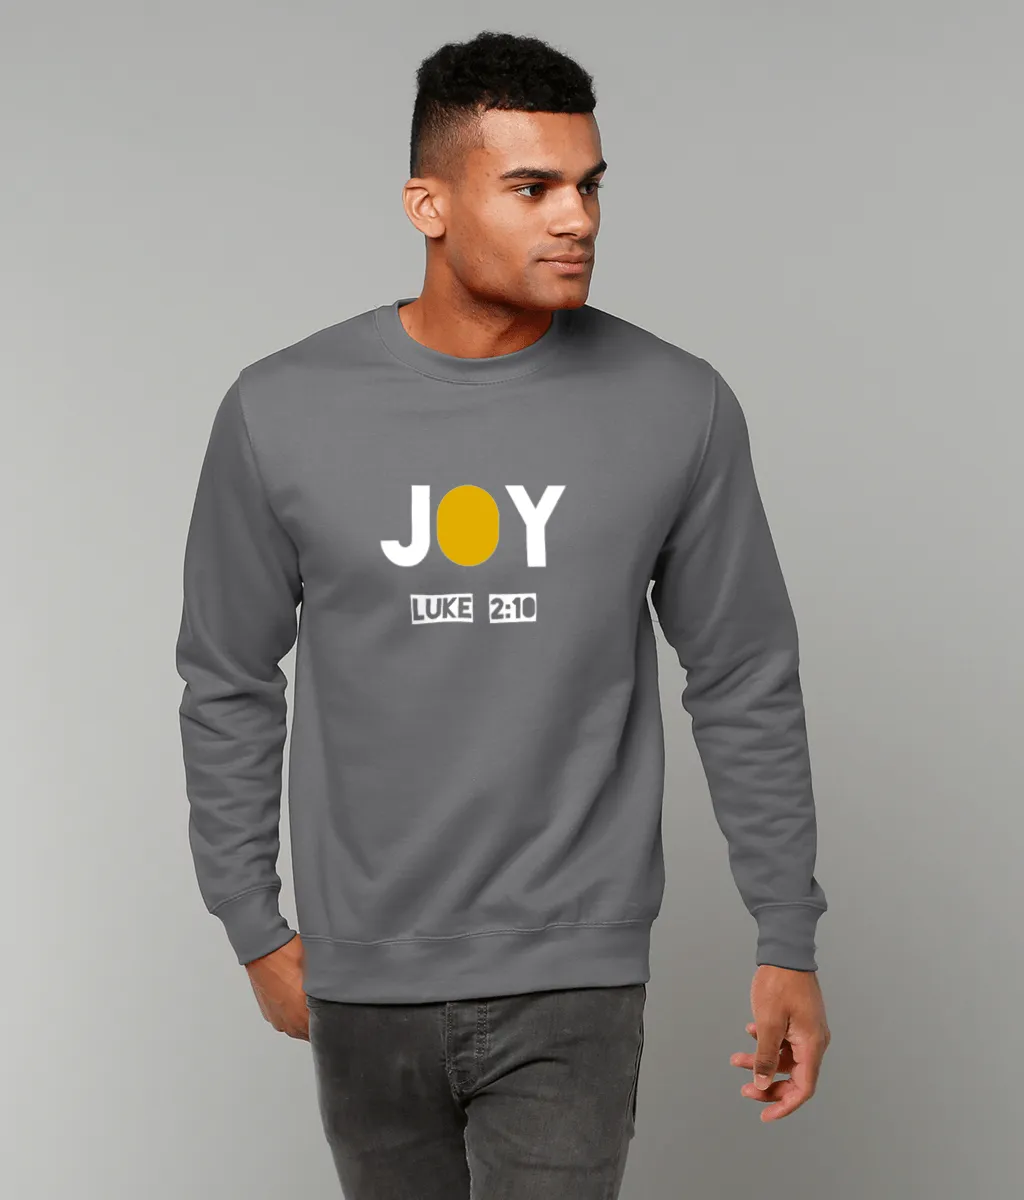 The 'JOY' Sweater